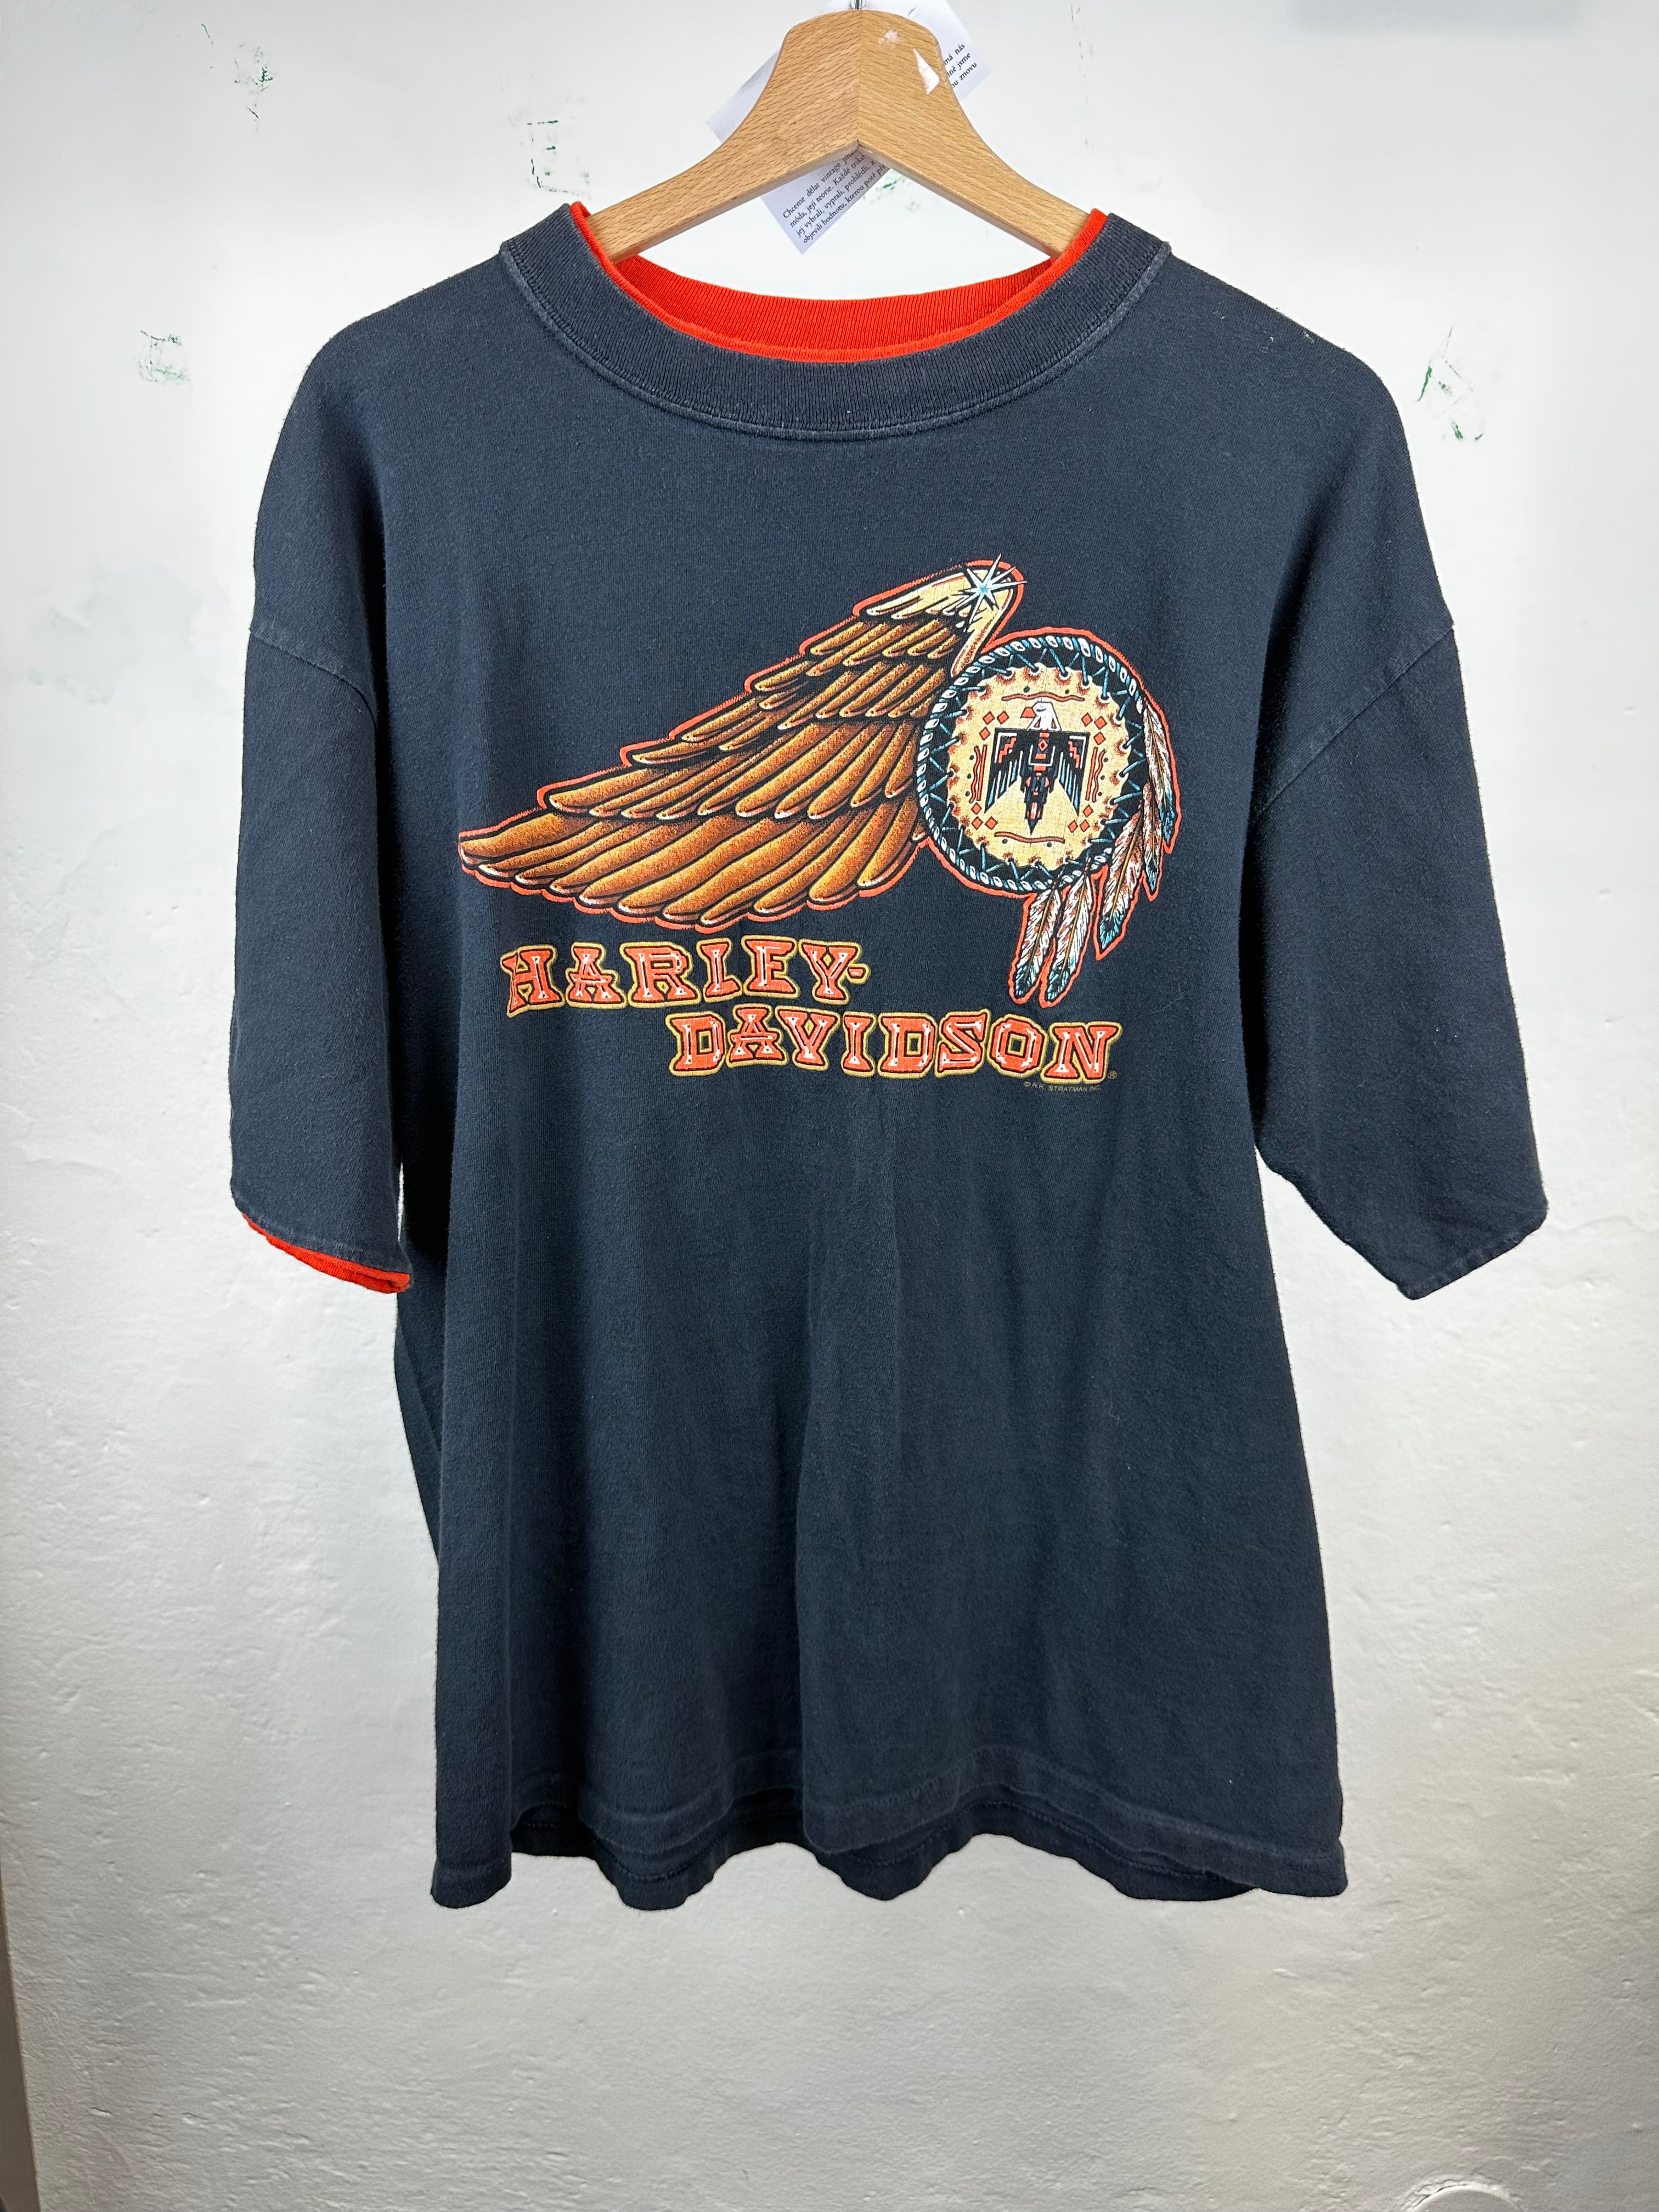 Vintage Harley Davidson 80s t-shirt - size XL